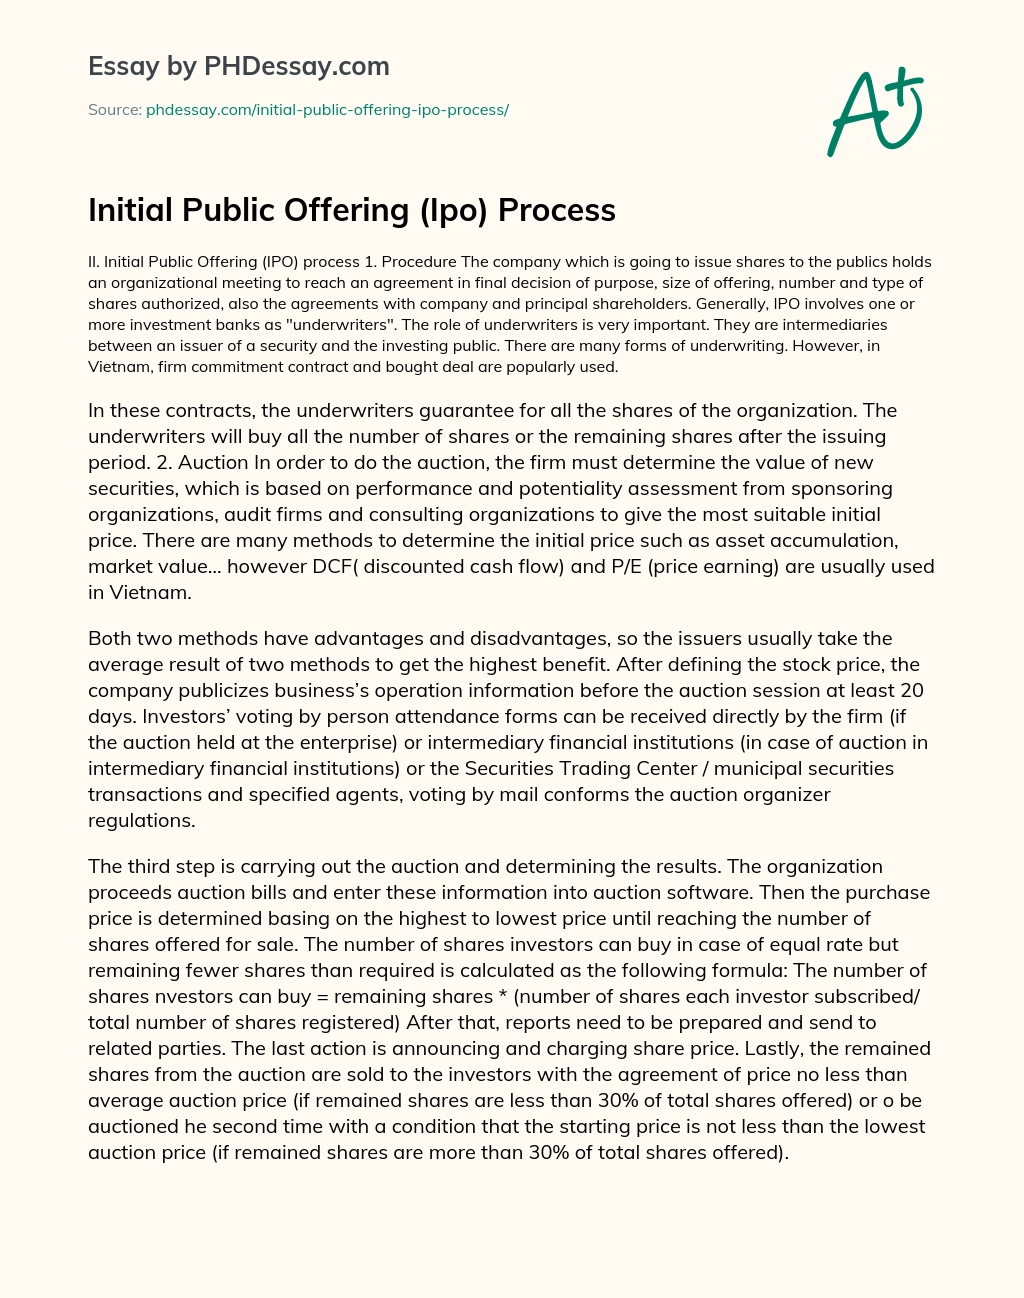 Initial Public Offering (Ipo) Process essay